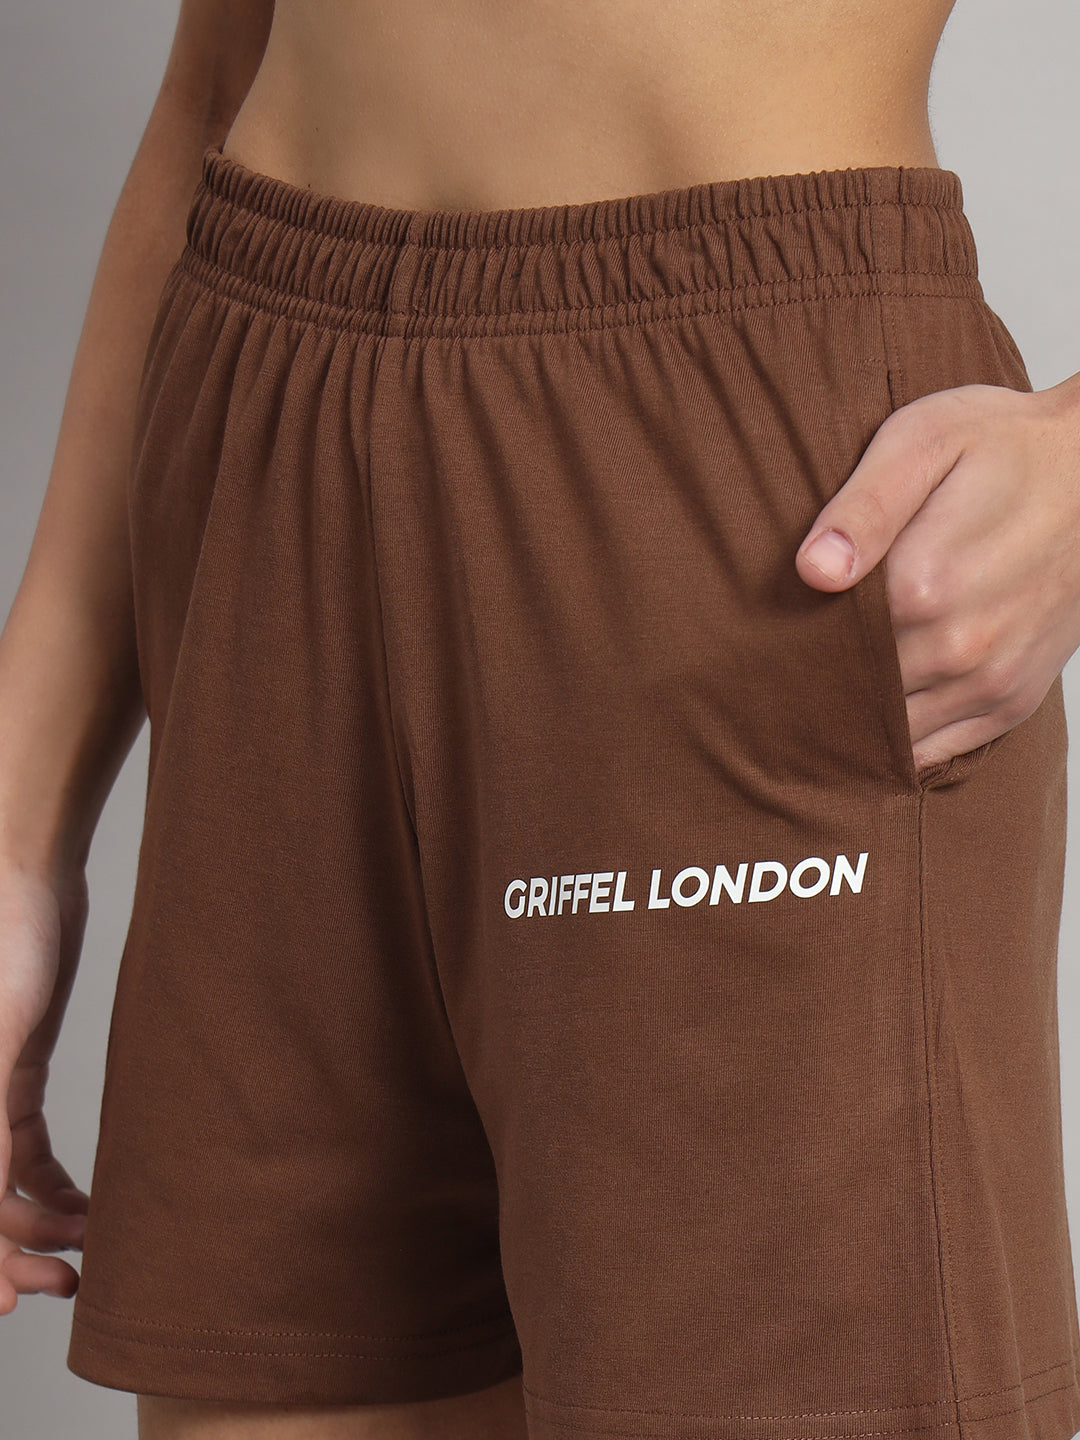 GRIFFEL Women Placement Print Oversized Loose fit Short - griffel